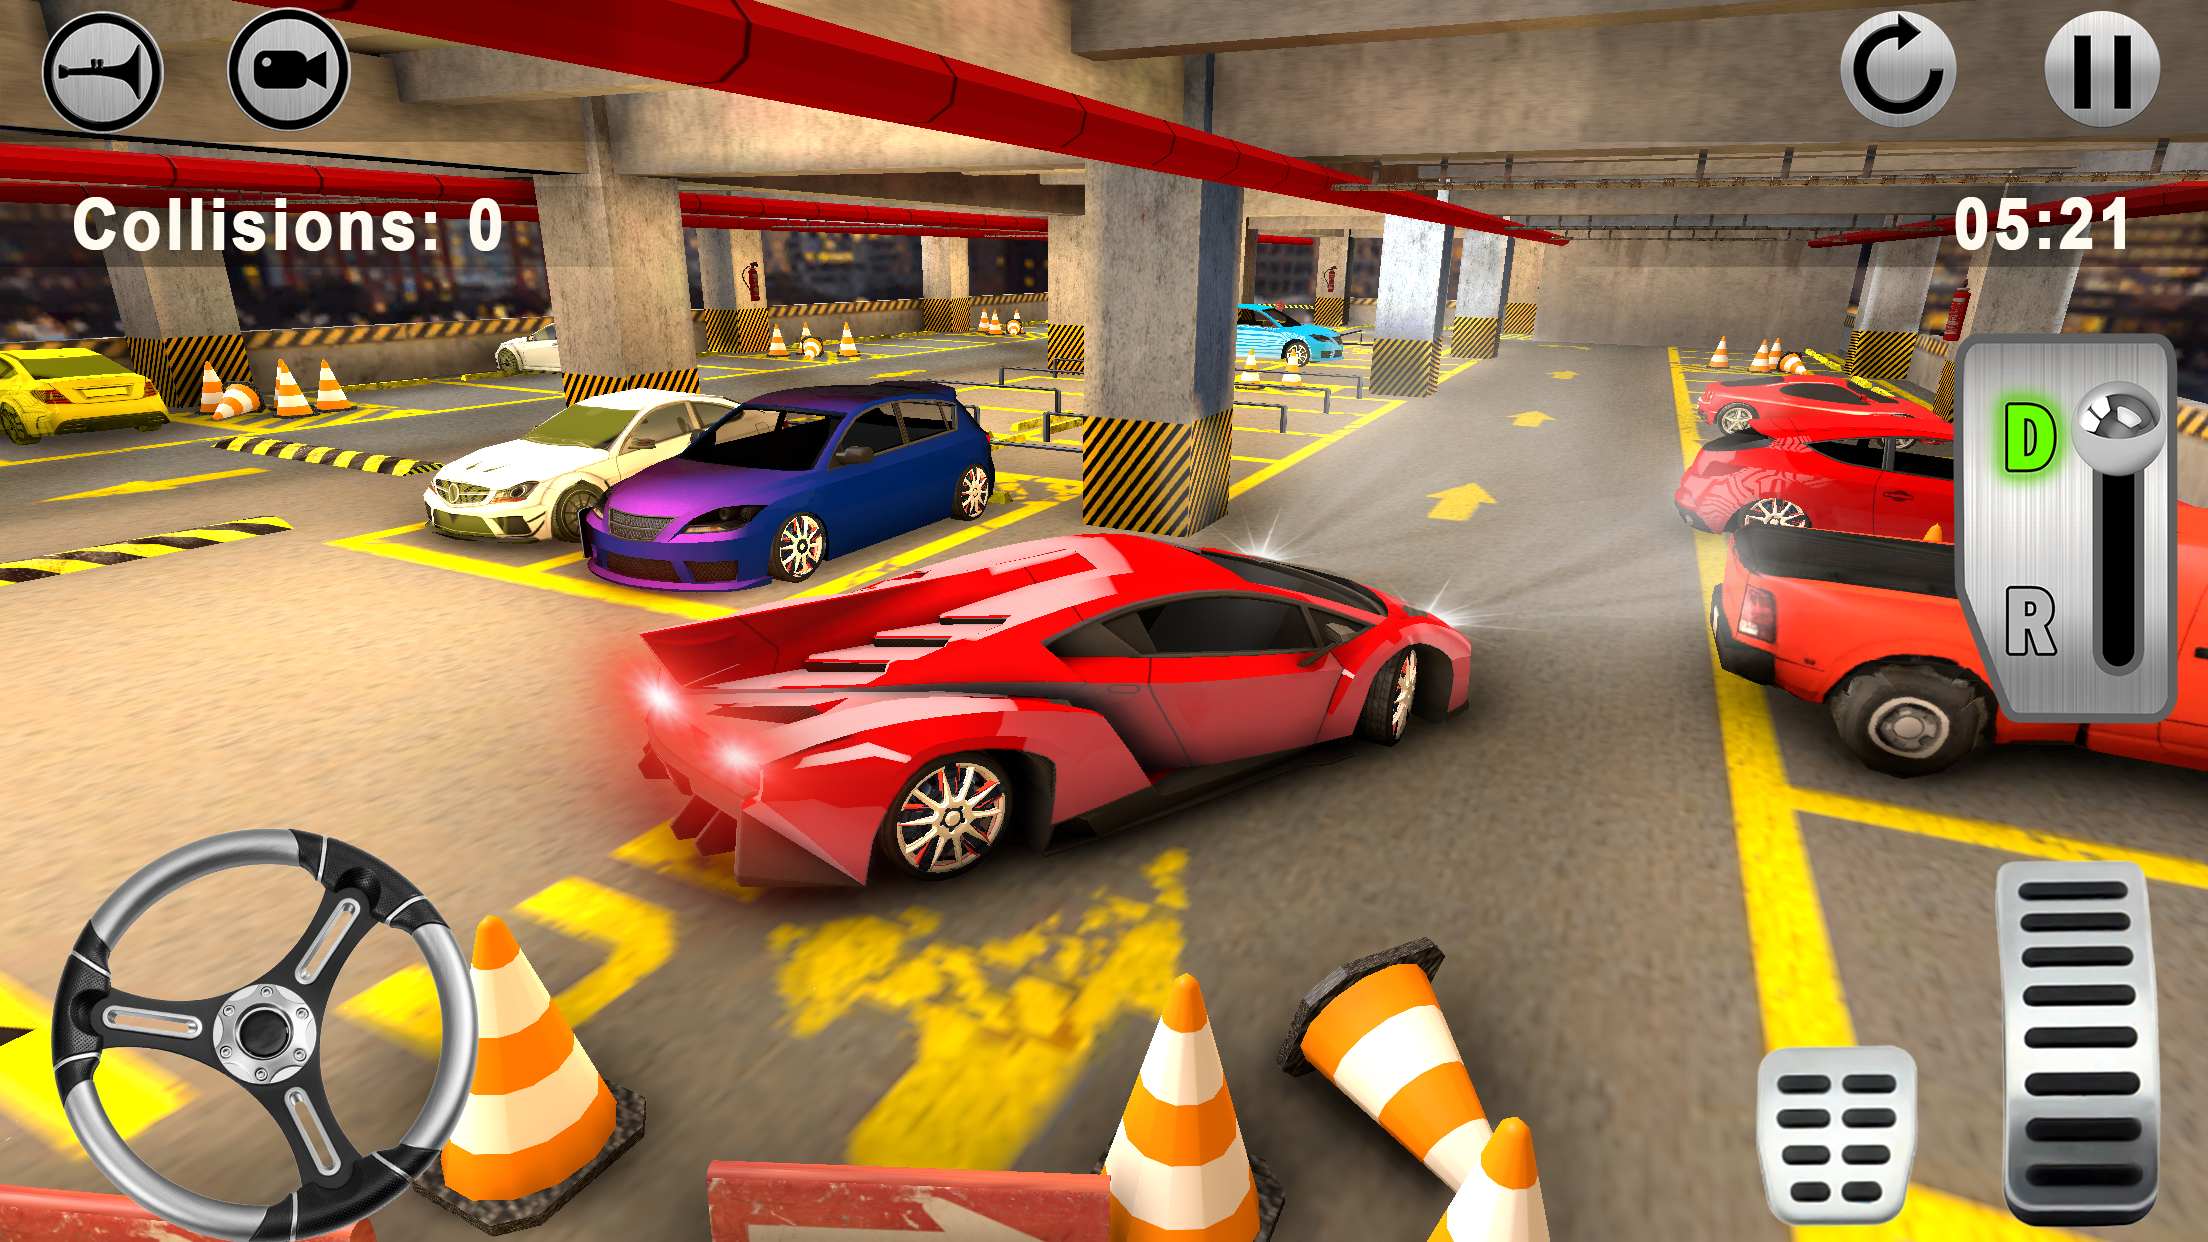 Screenshot 1 of Parking - Jeu de simulation 1